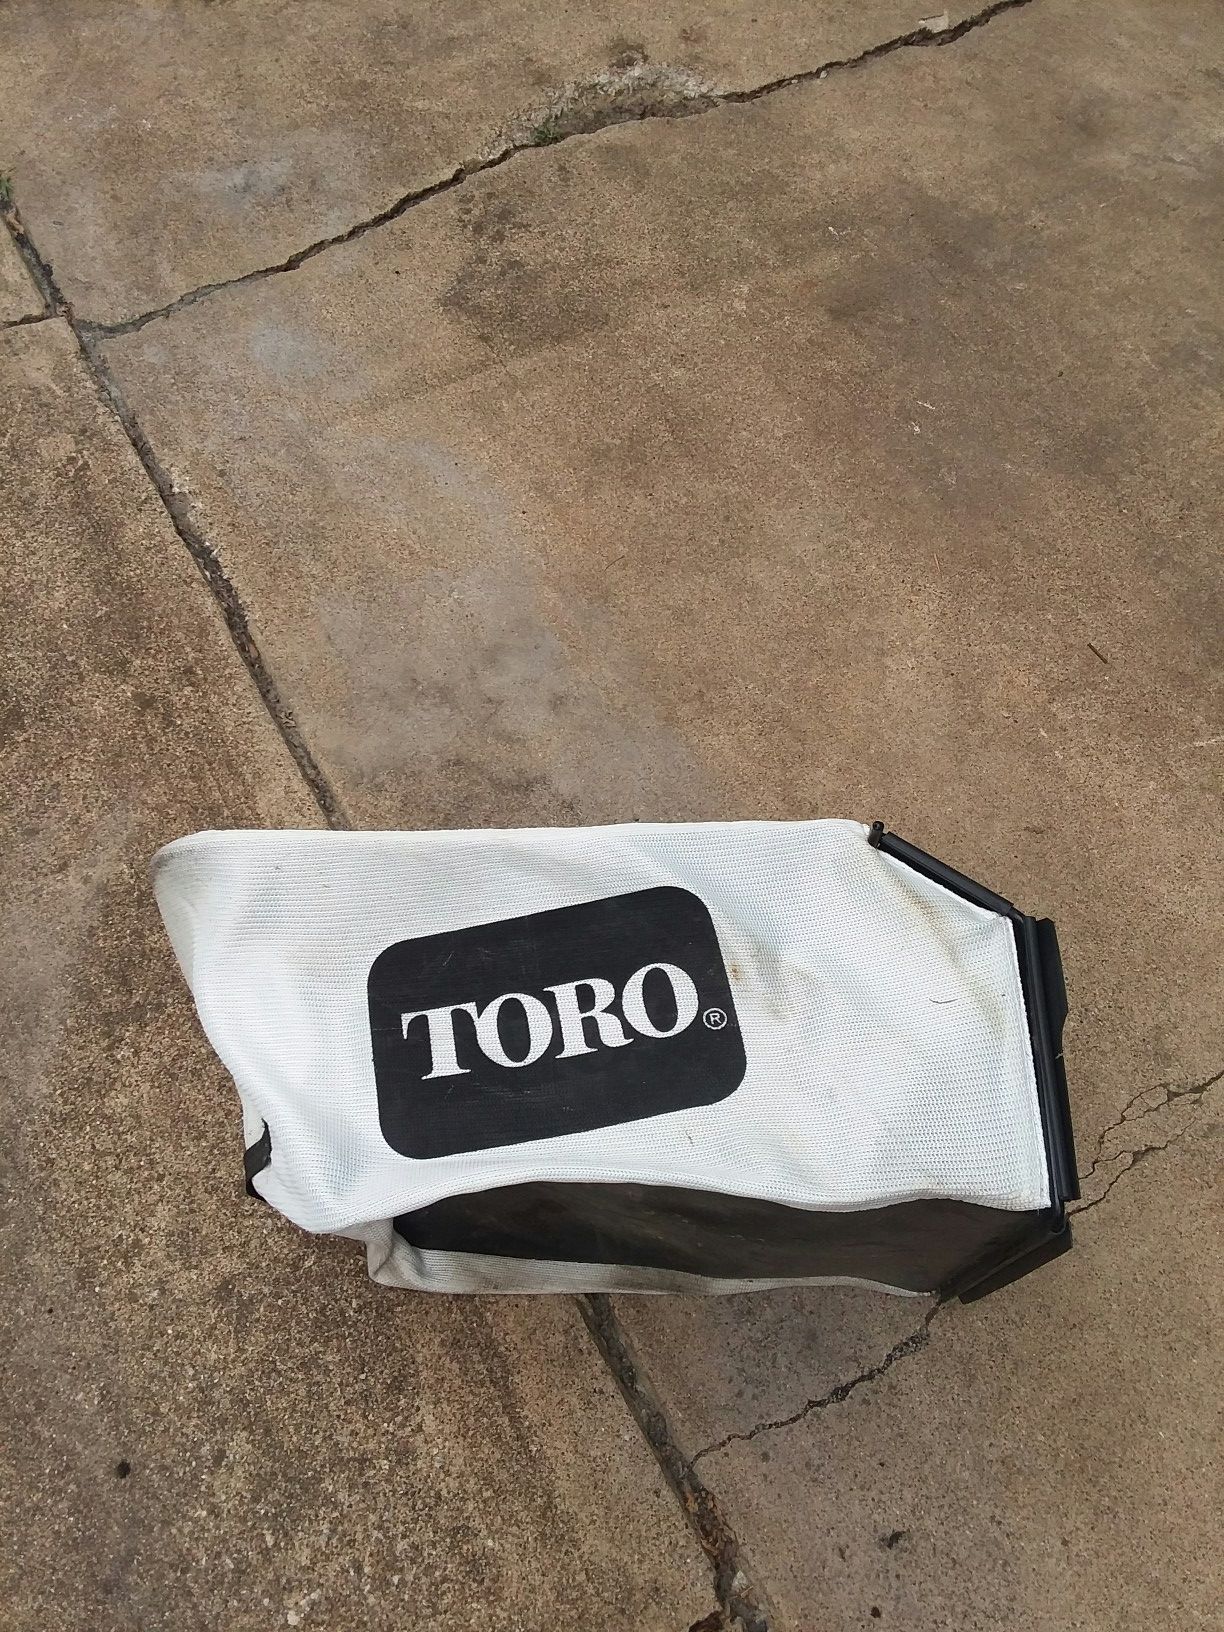 Toro lawn mower collection bag